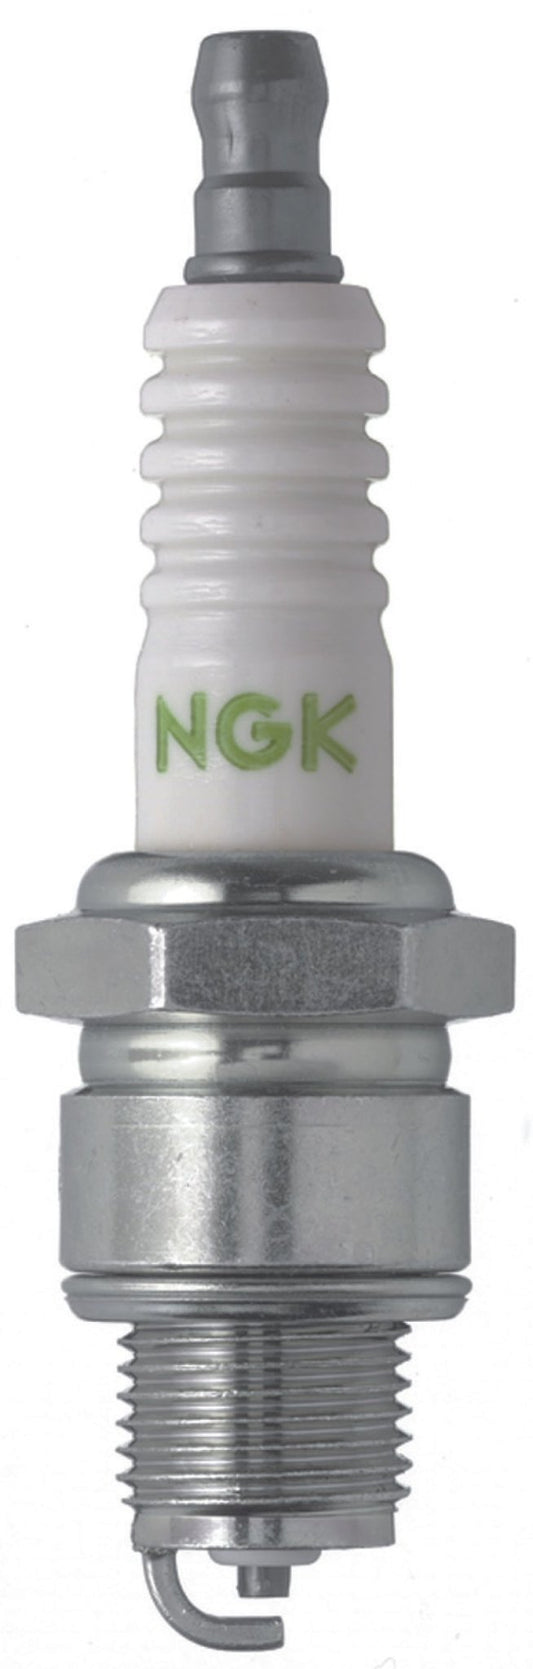 NGK - NGK BLYB Spark Plug Box of 6 (BP8H-N-10) - Demon Performance